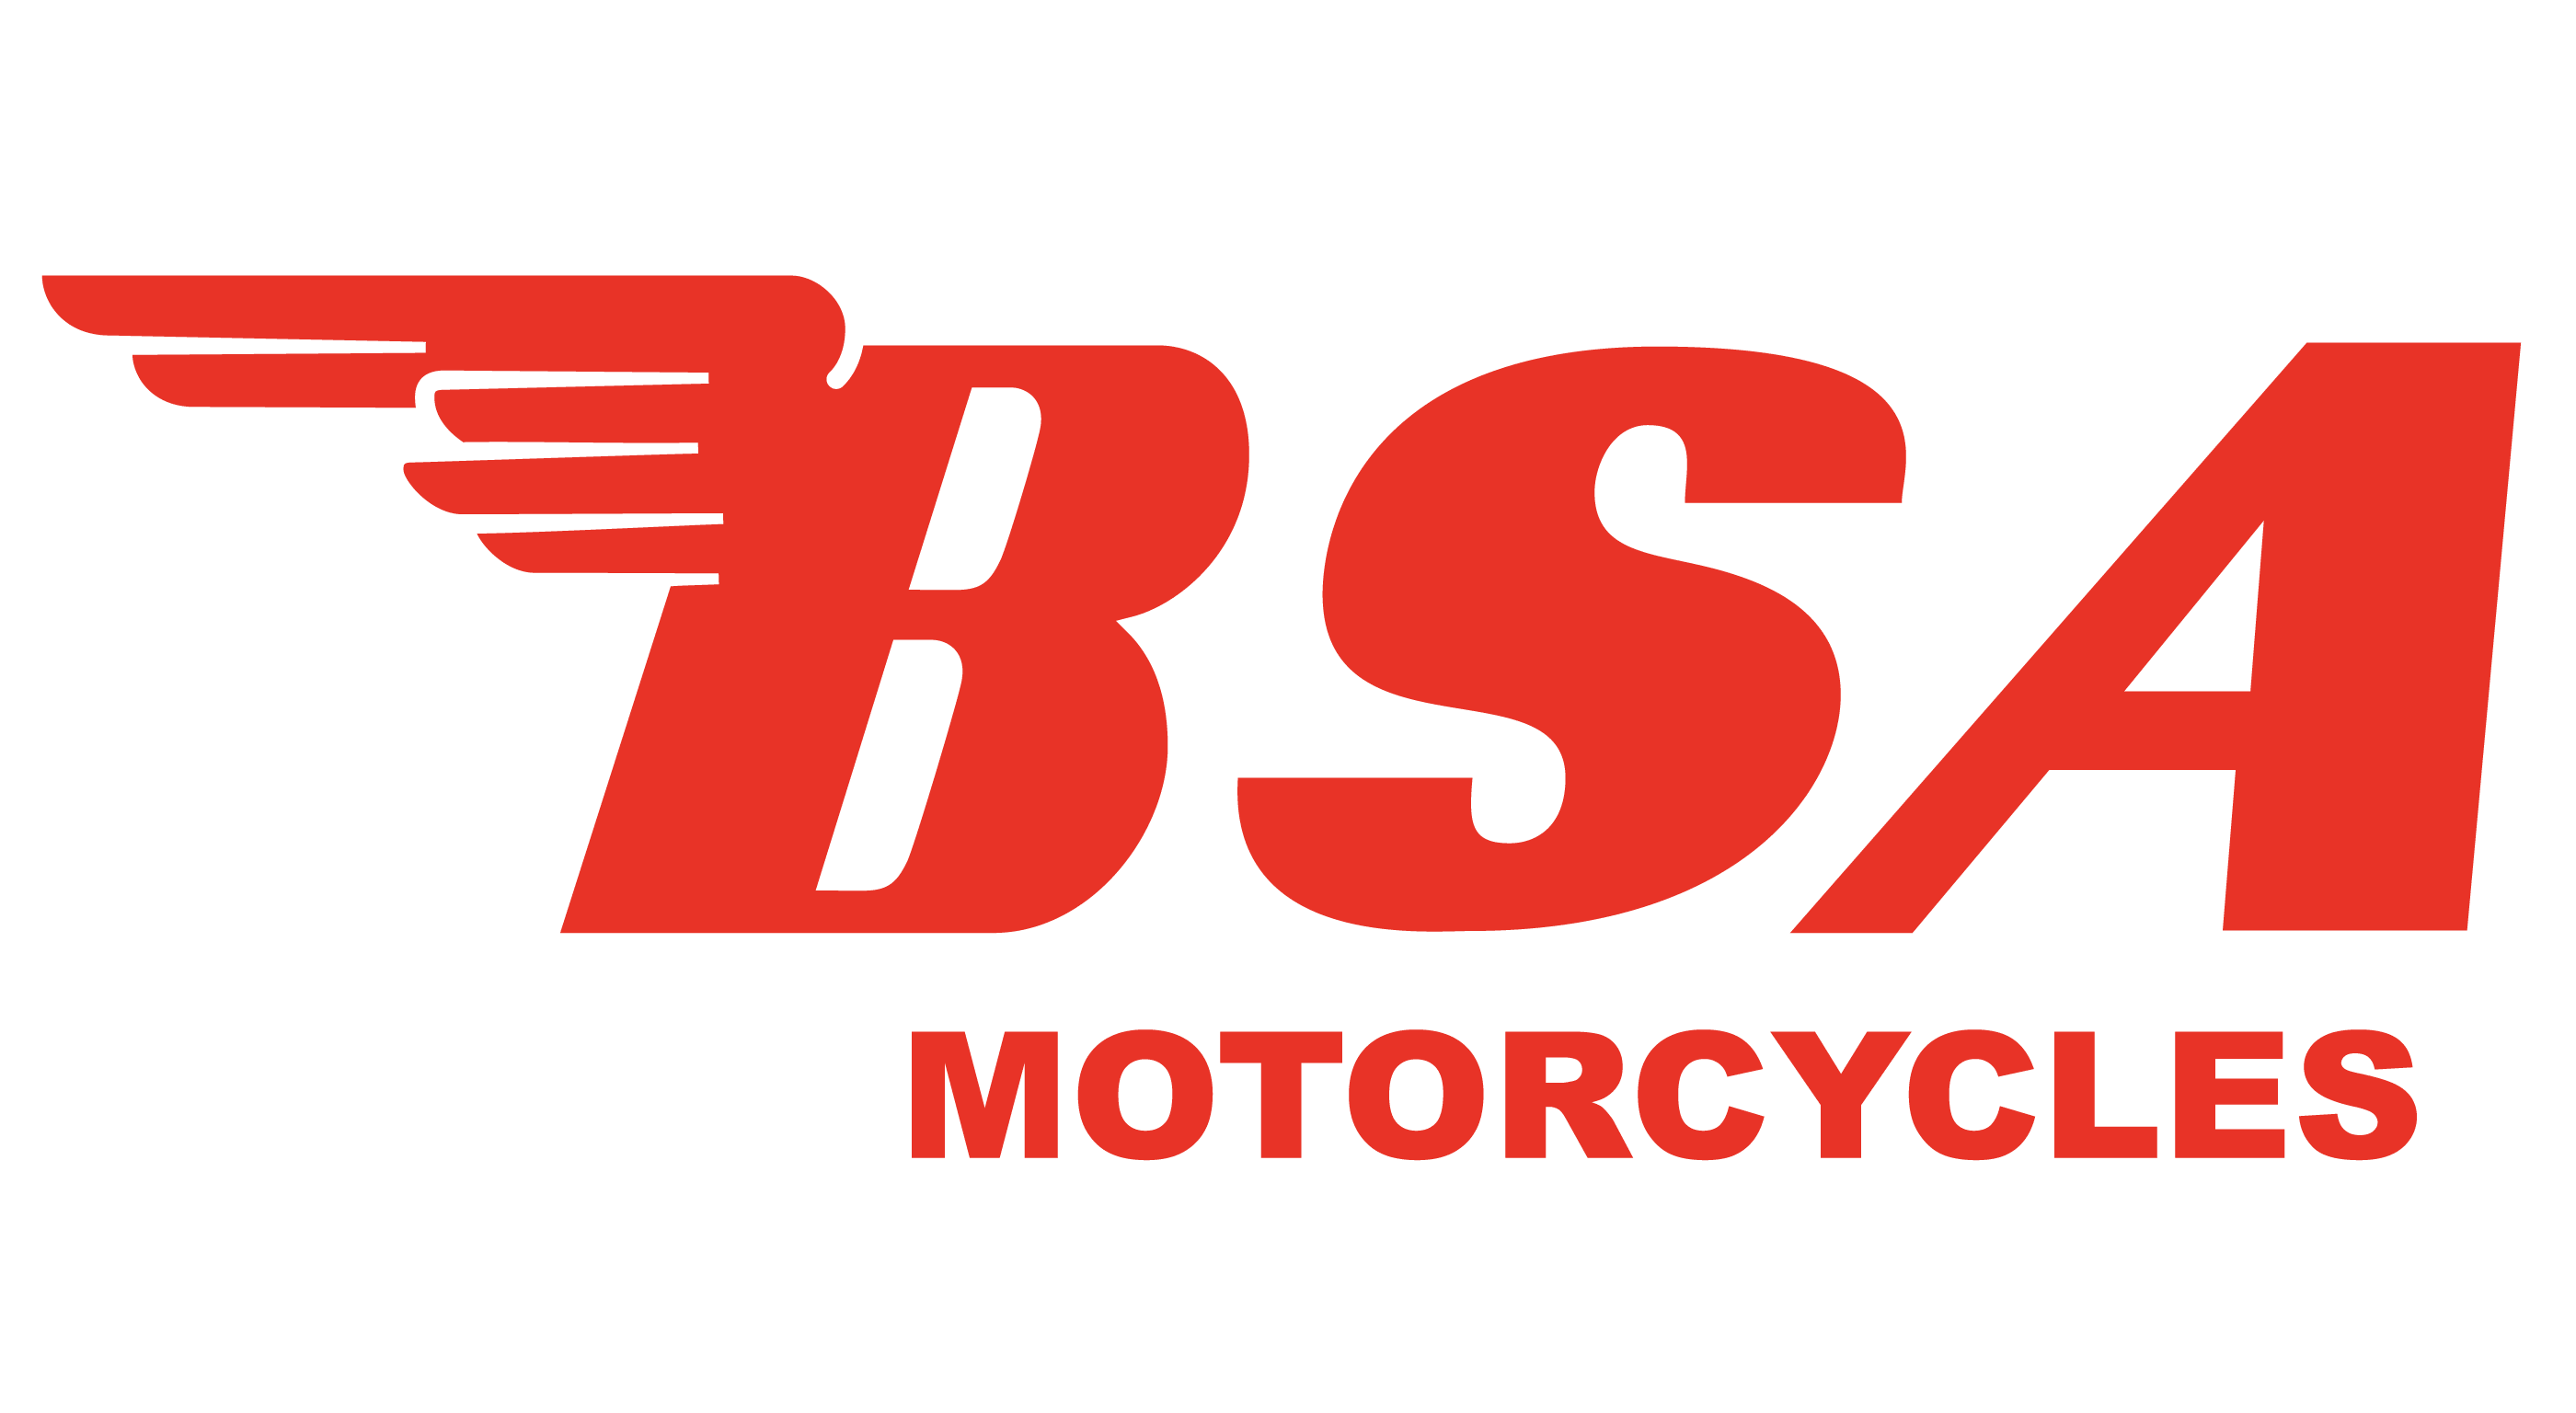 Motorcycle Company Logo - BSA Logo Motorcycles. Motorcycle Logos. Motorcycle